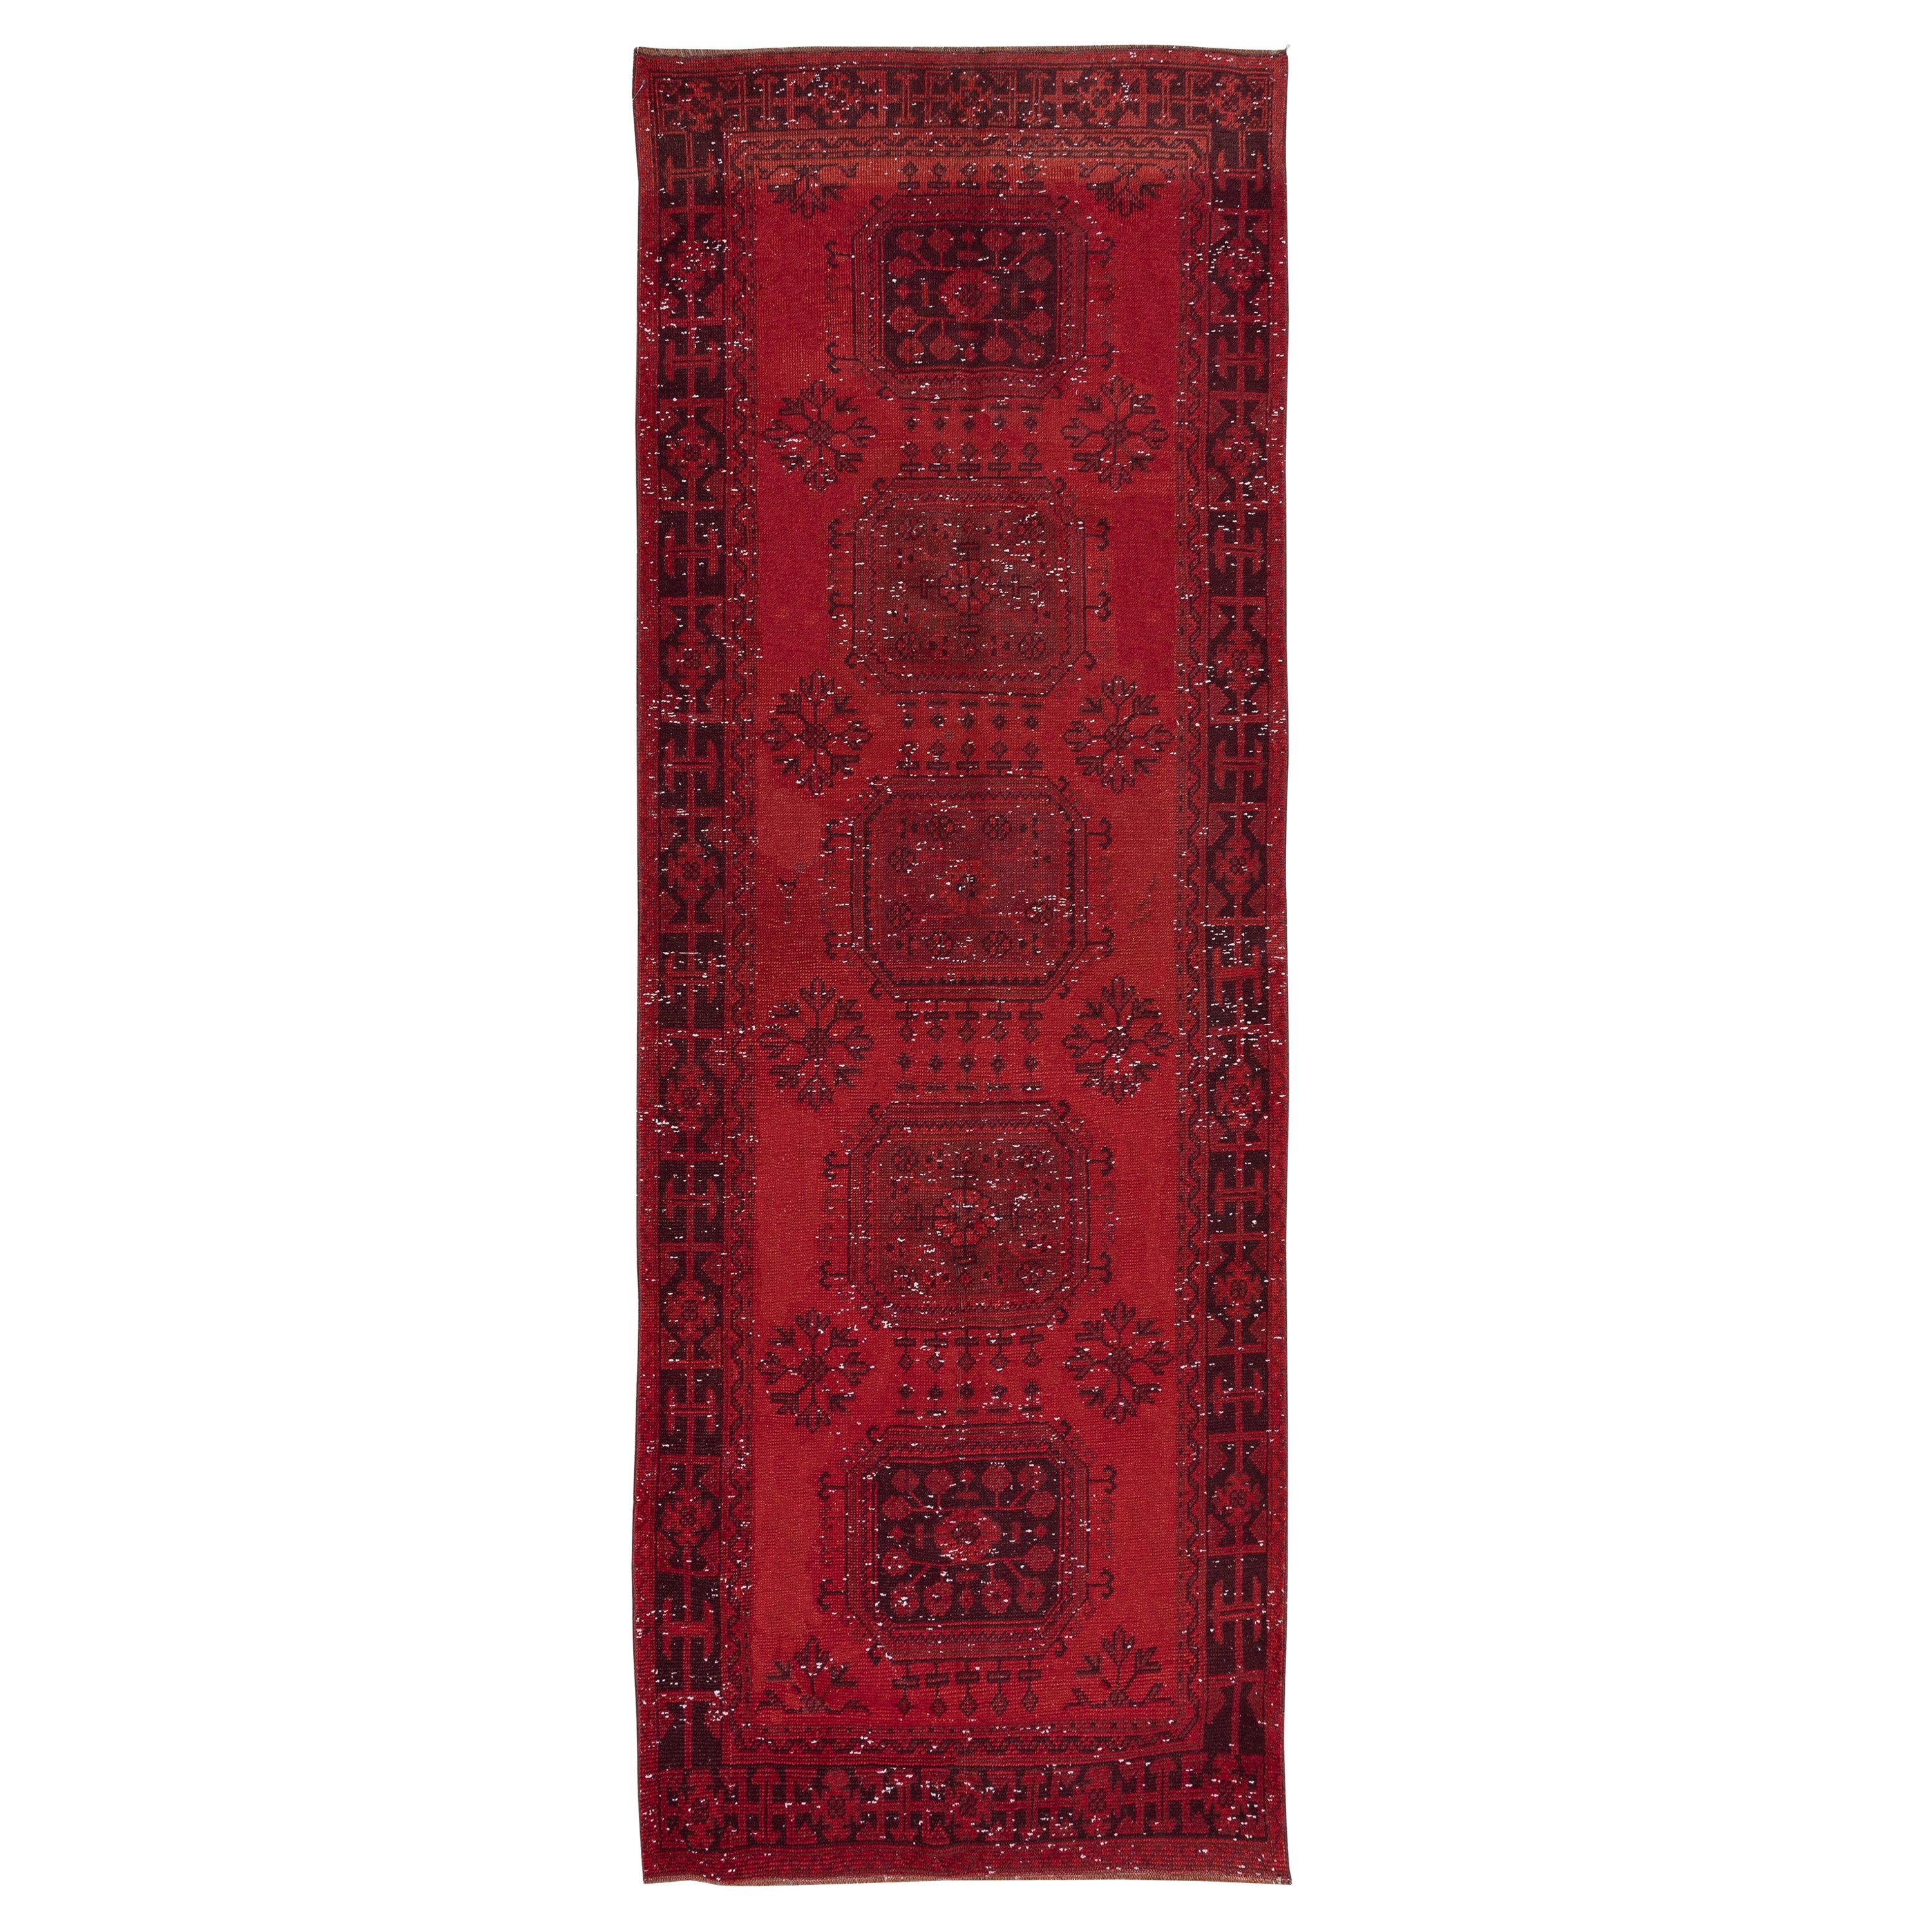 4x11.2 Ft Hand Knotted Runner Rug. Modern Turkish Hallway Carpet in Dark Red For Sale